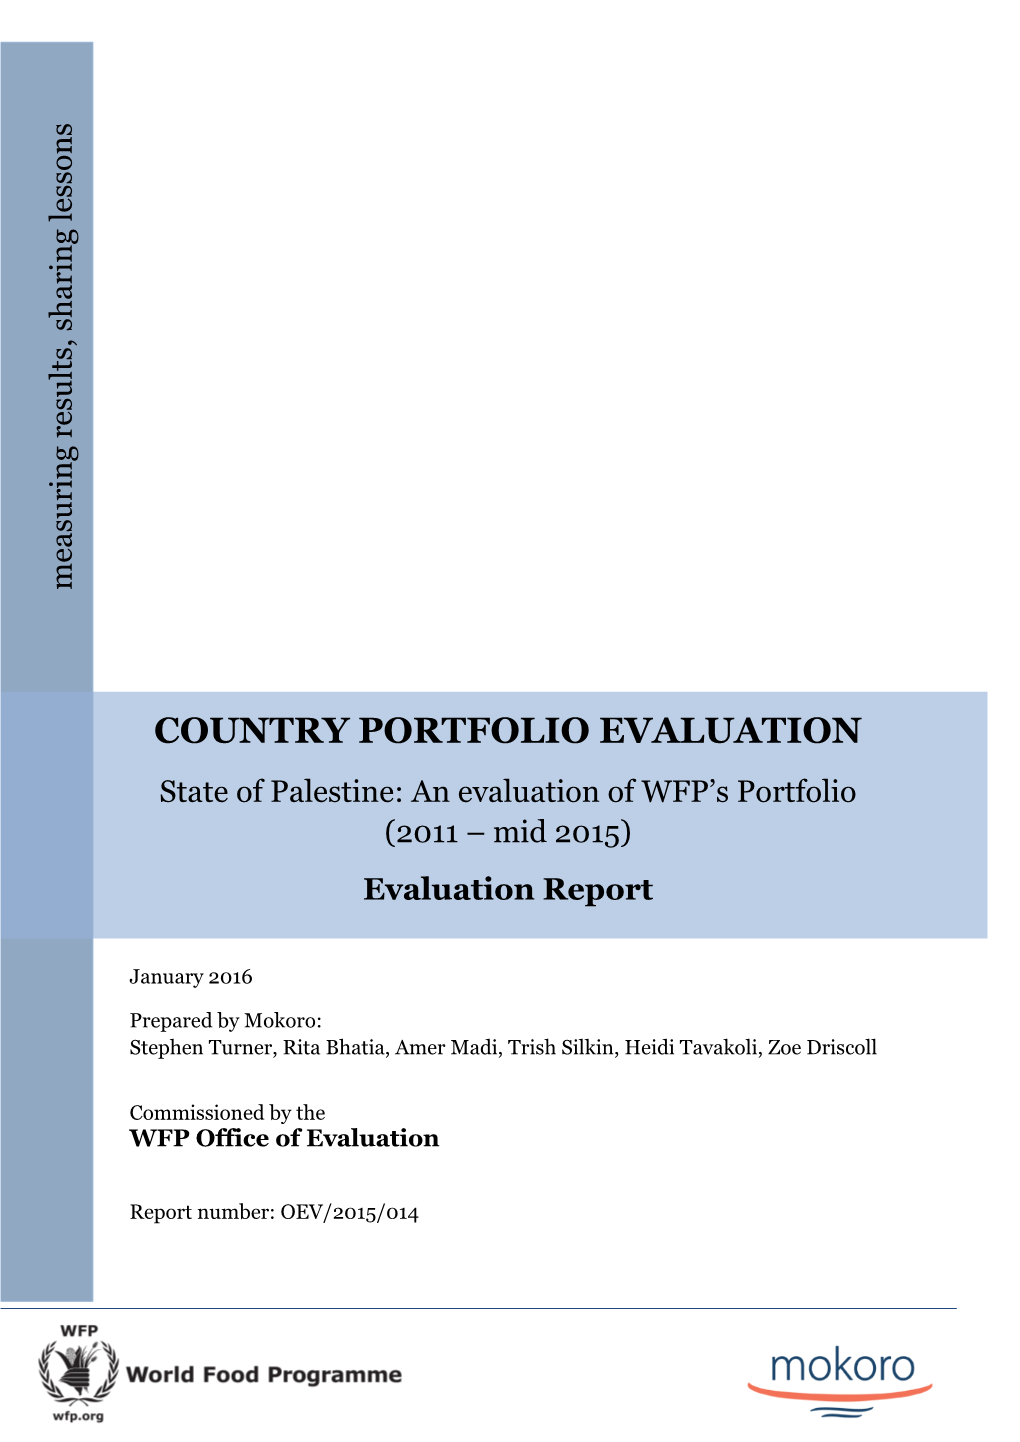 Country Portfolio Evaluation